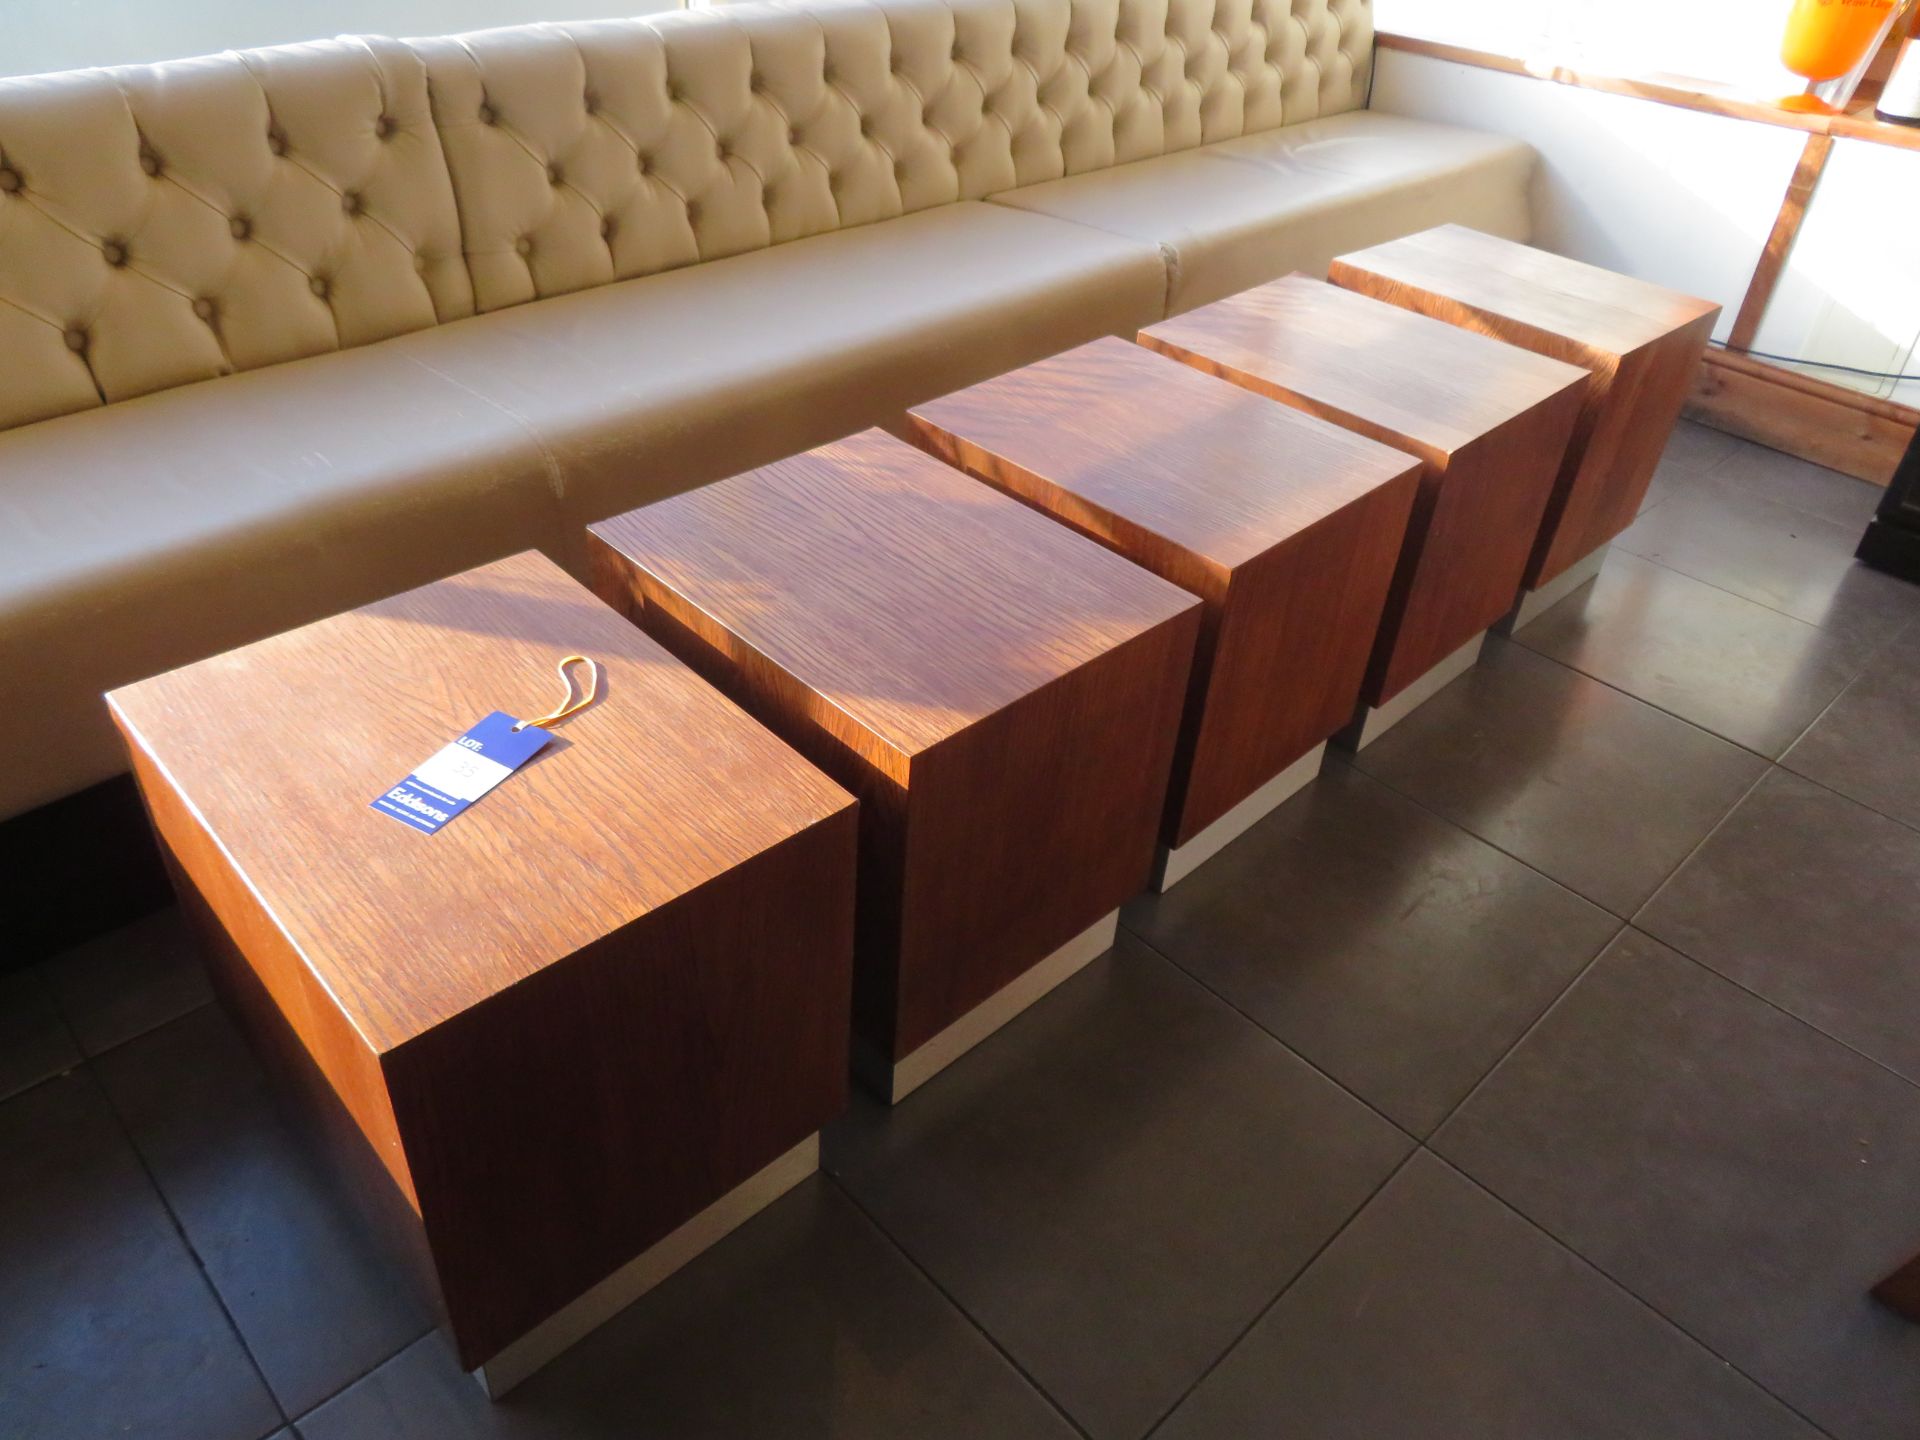 5 x Darkwood Veneer Coffee Tables (500 x 400 x 500mm high)- One Water Damaged - Image 2 of 4